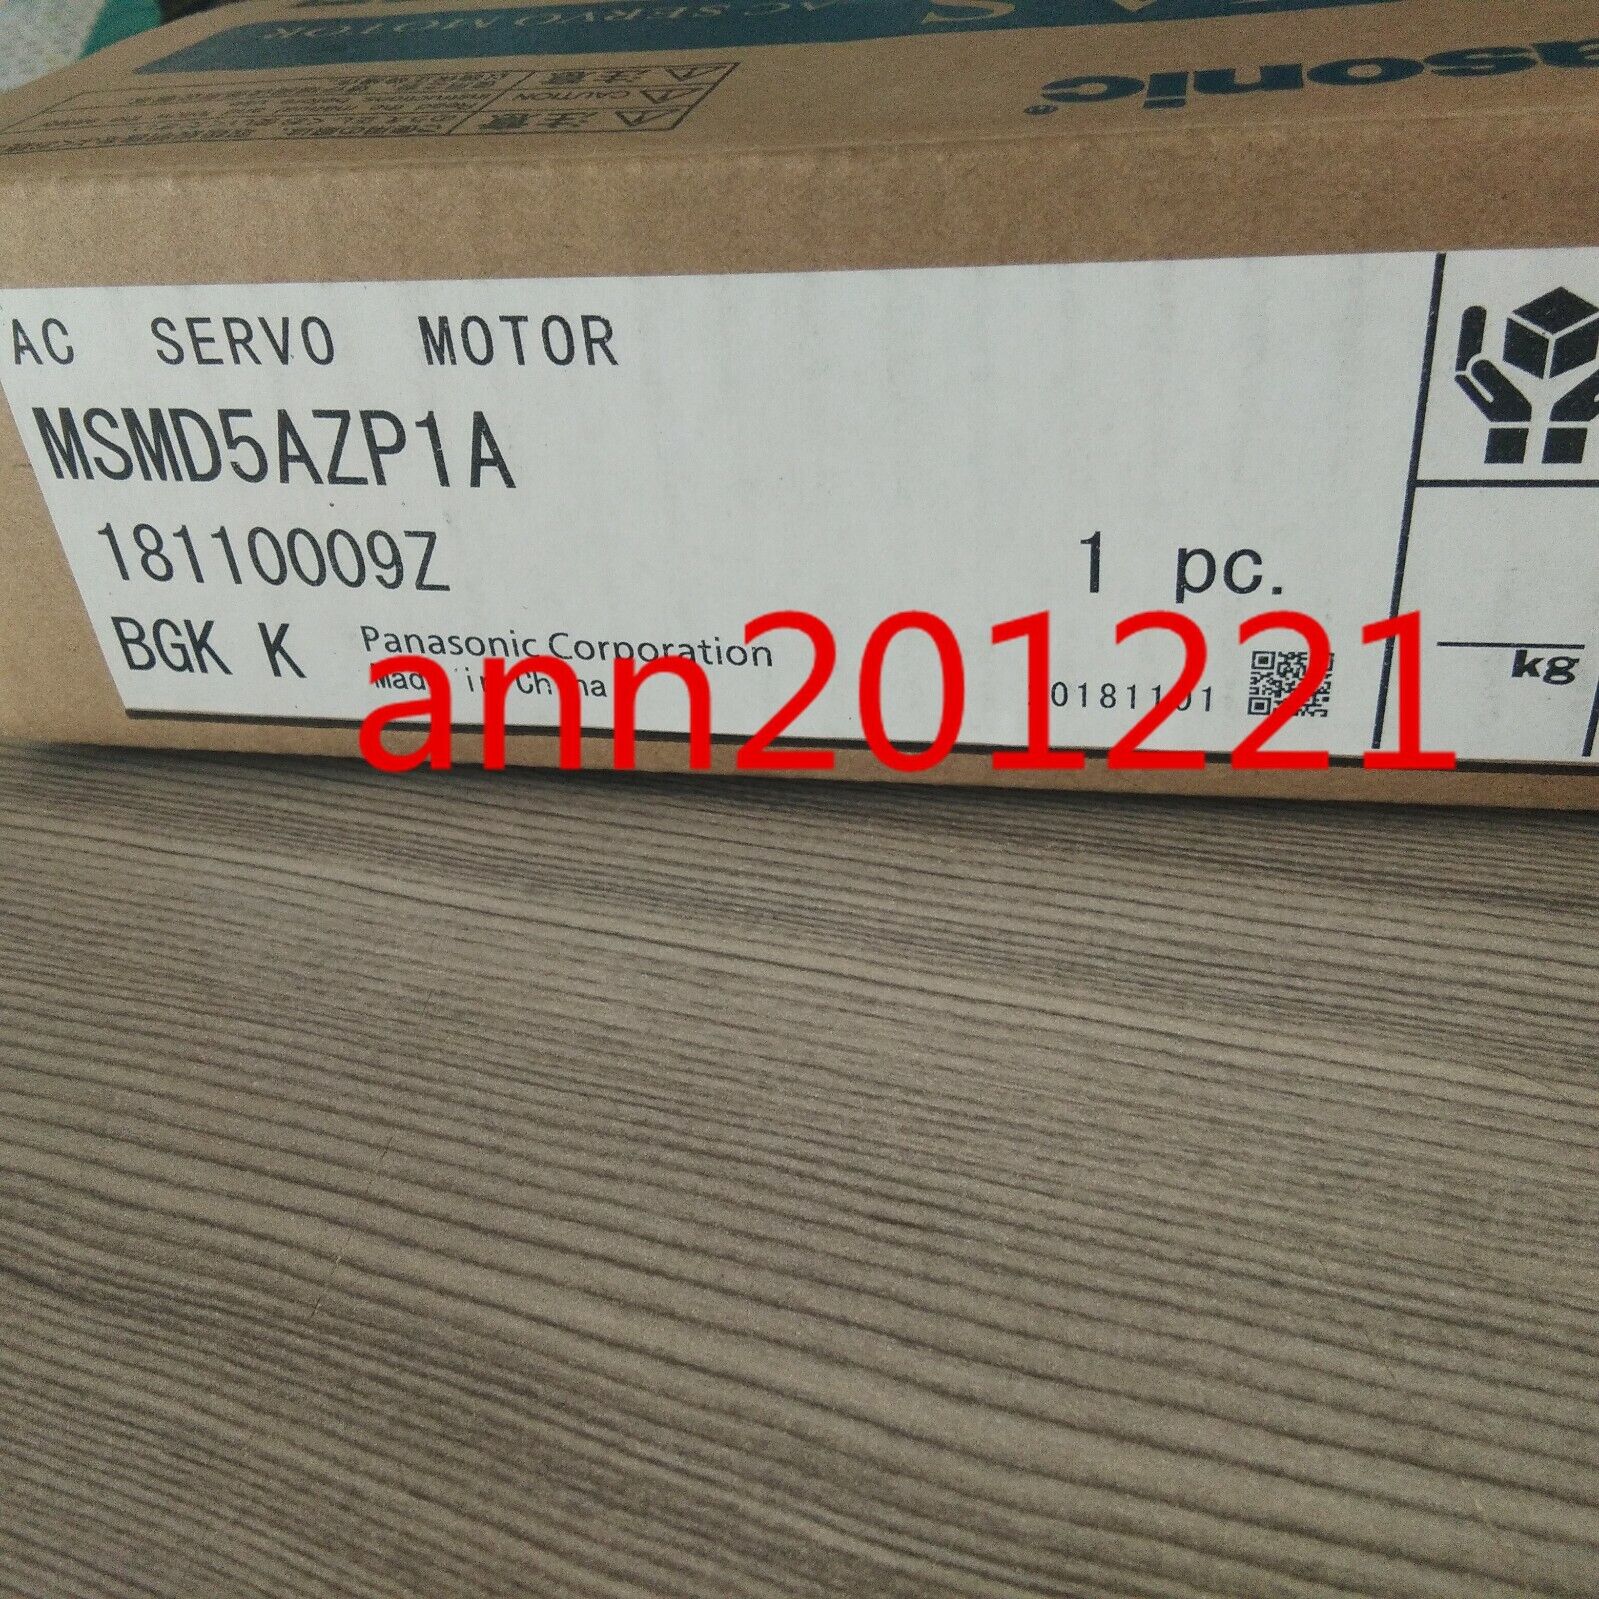 1PC NEW Panasonic Motor MSMD5AZP1A